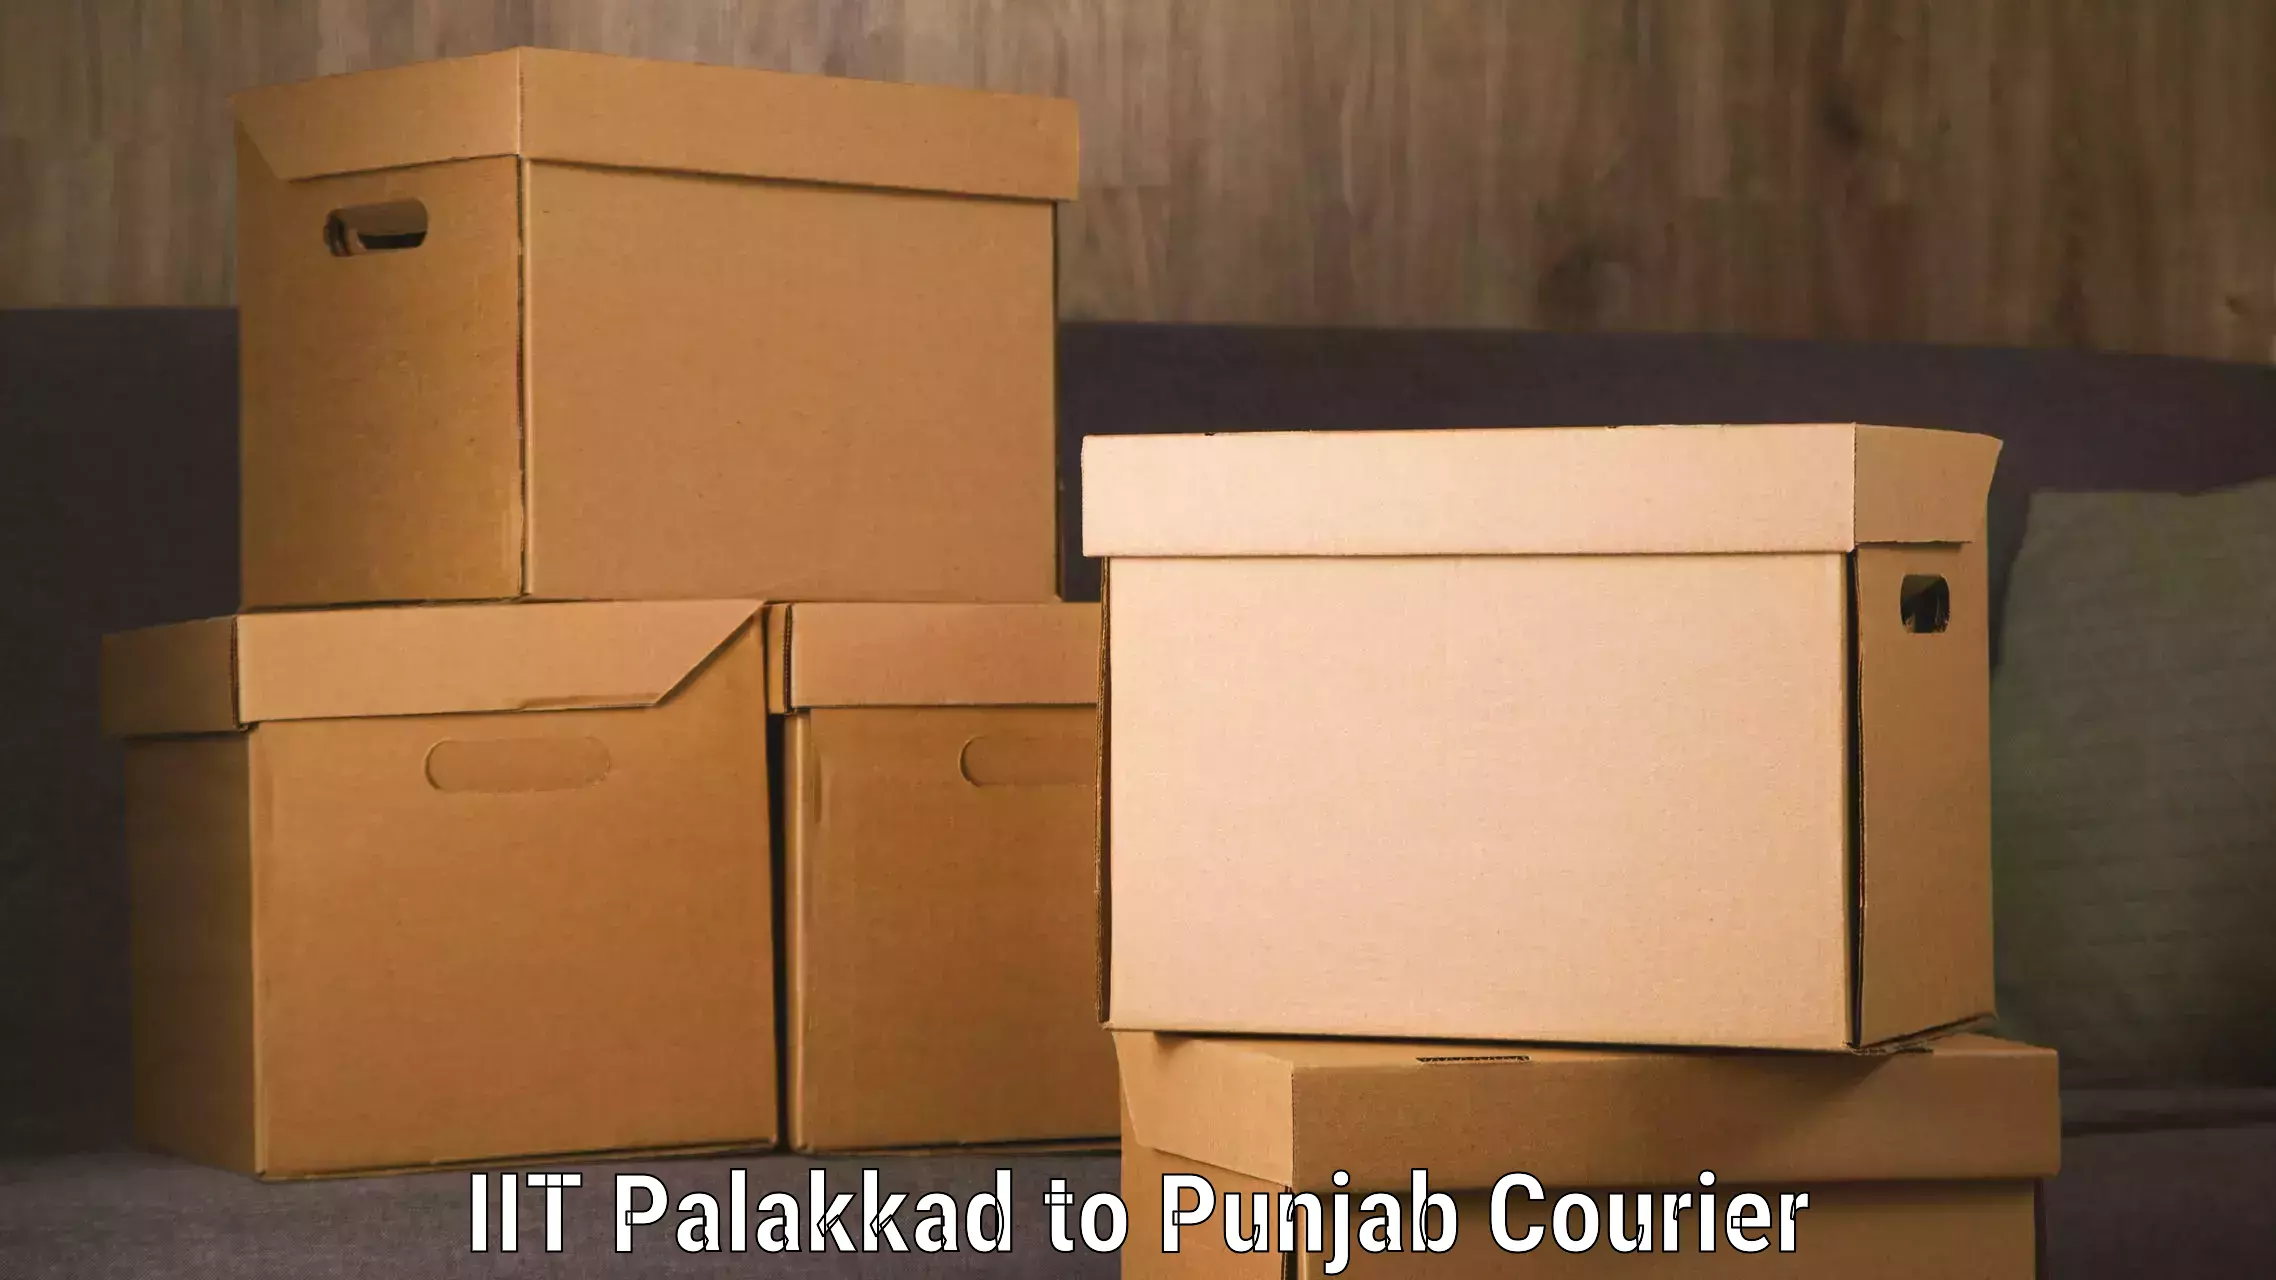 Doorstep delivery service IIT Palakkad to Punjab